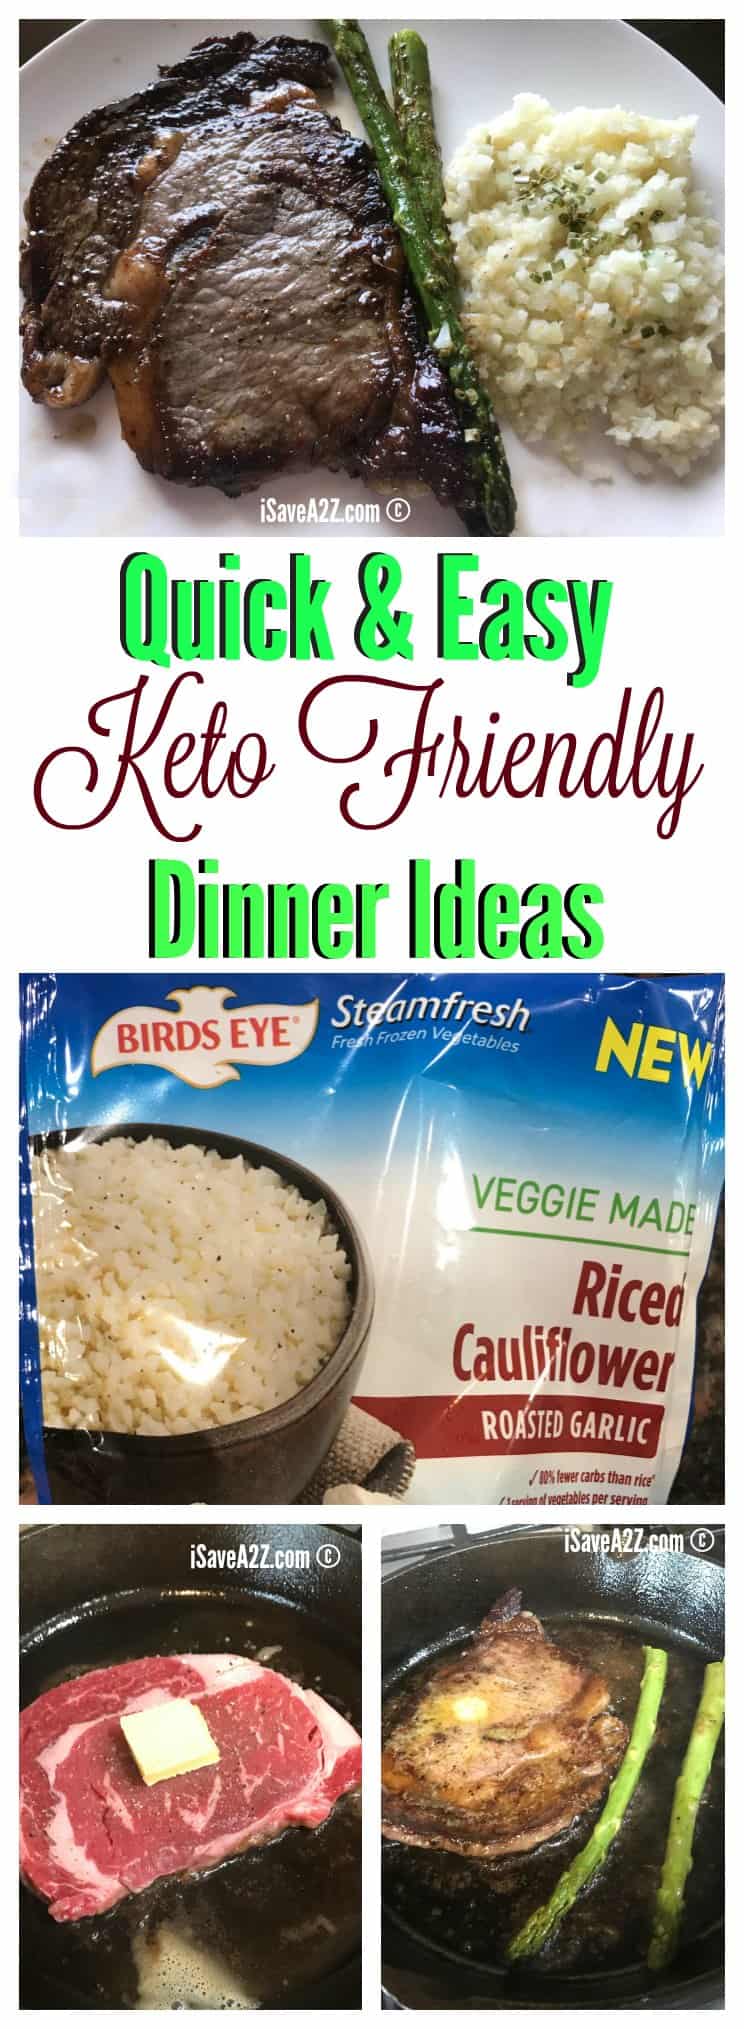 Keto Friendly Quick Dinner Idea: Ribeye Steak, Riced Cauliflower & Asparagus